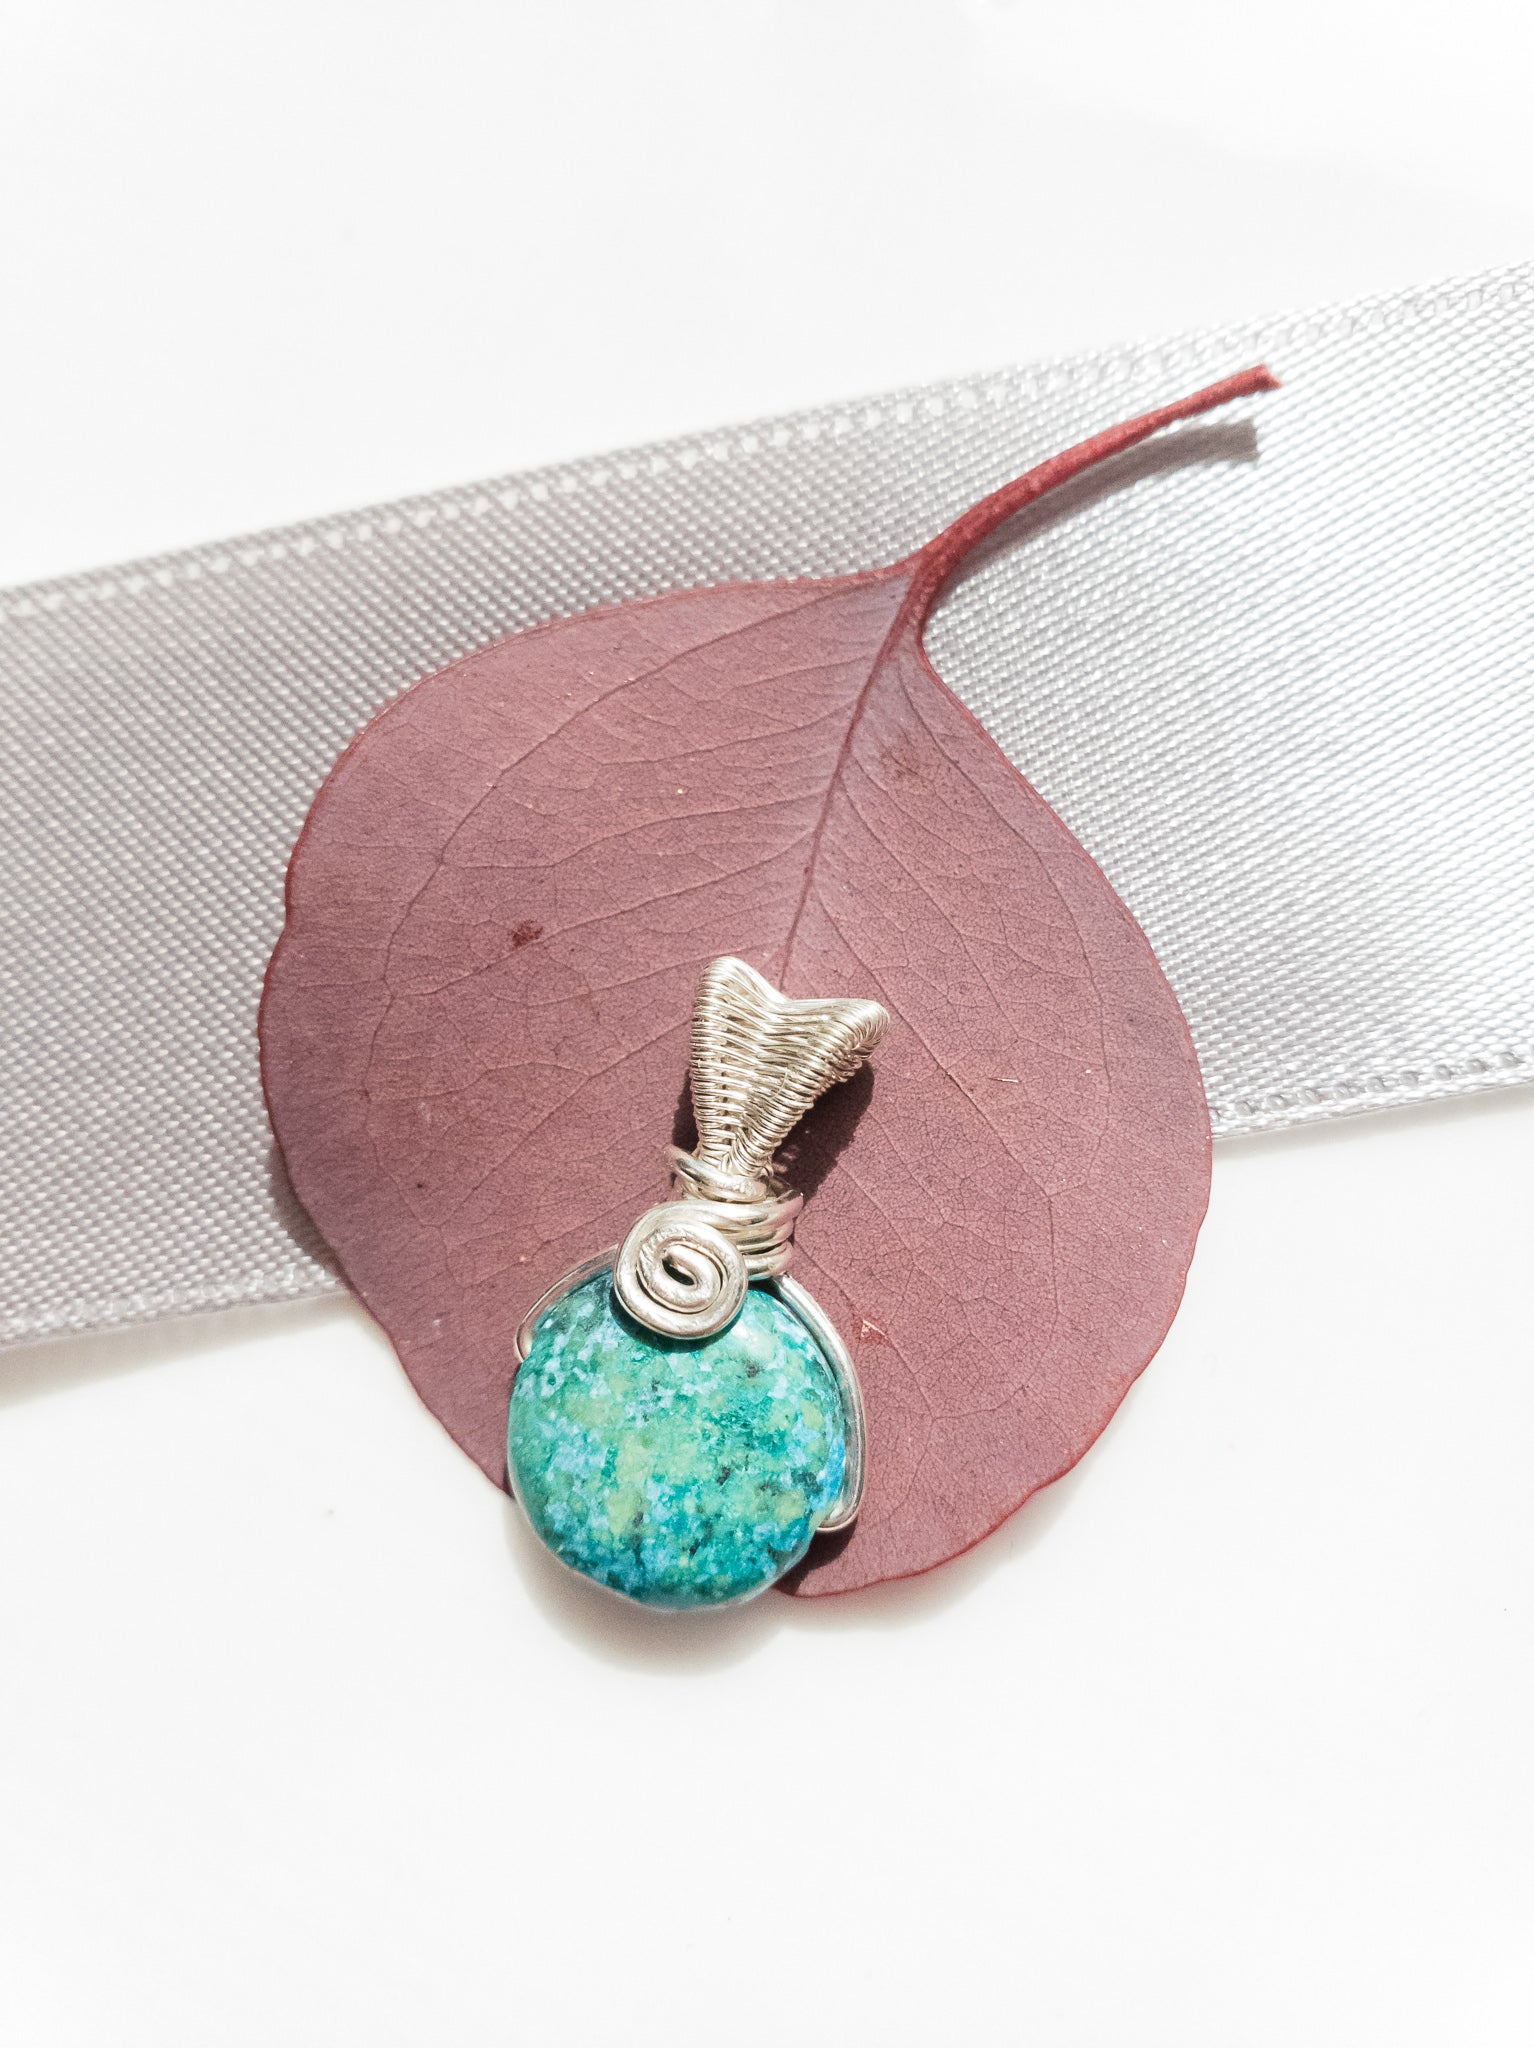 Laguna Collection - Blue Chrysocolla Pendant - close-up view - BellaChel Jeweler